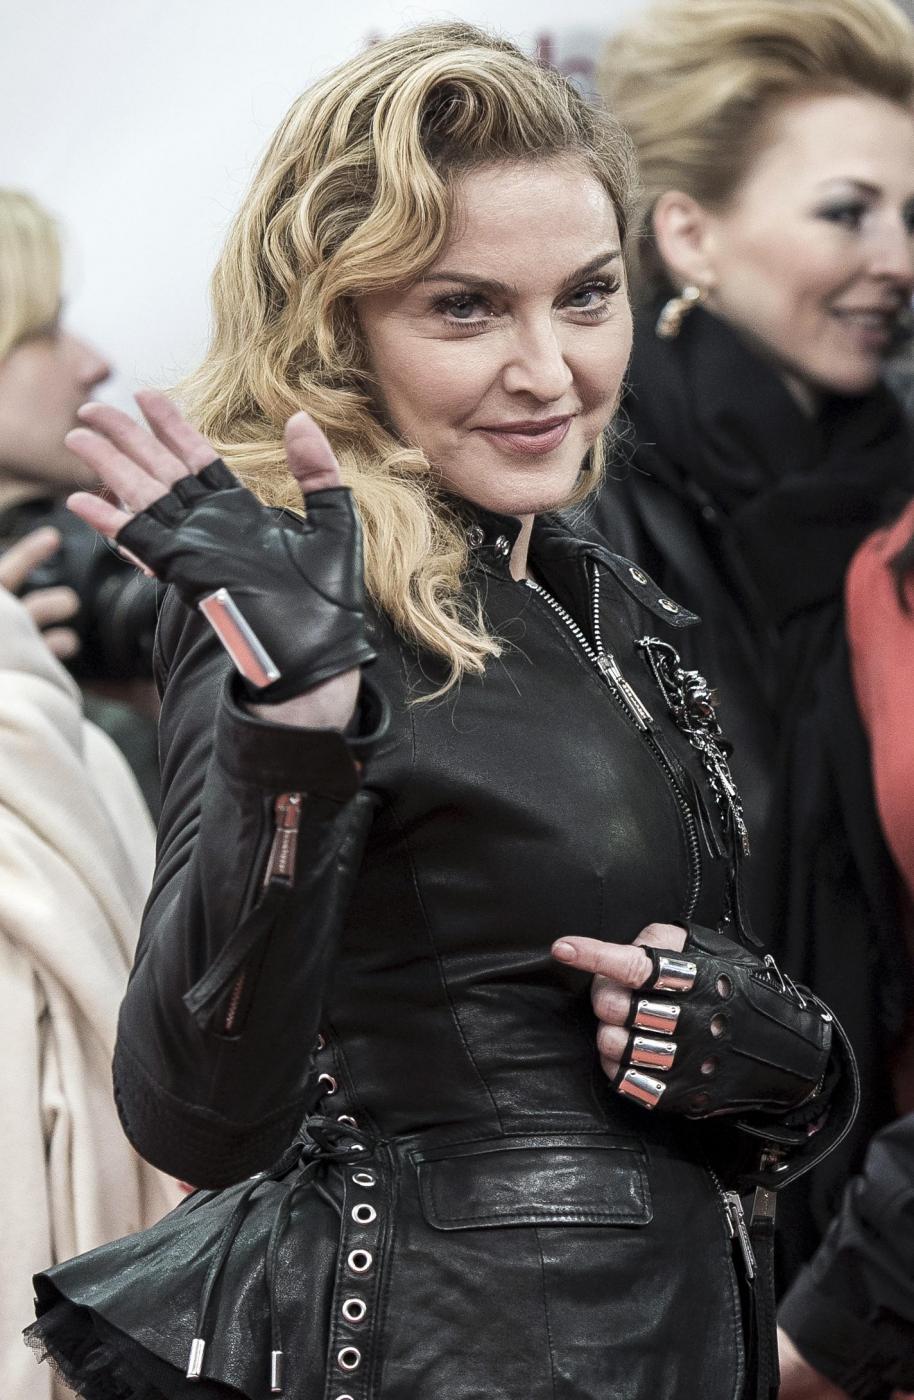 Erffnung von Madonnas Hard Candy Fitness Club in Berlin Madonna apre la sua palestra a Berlino01